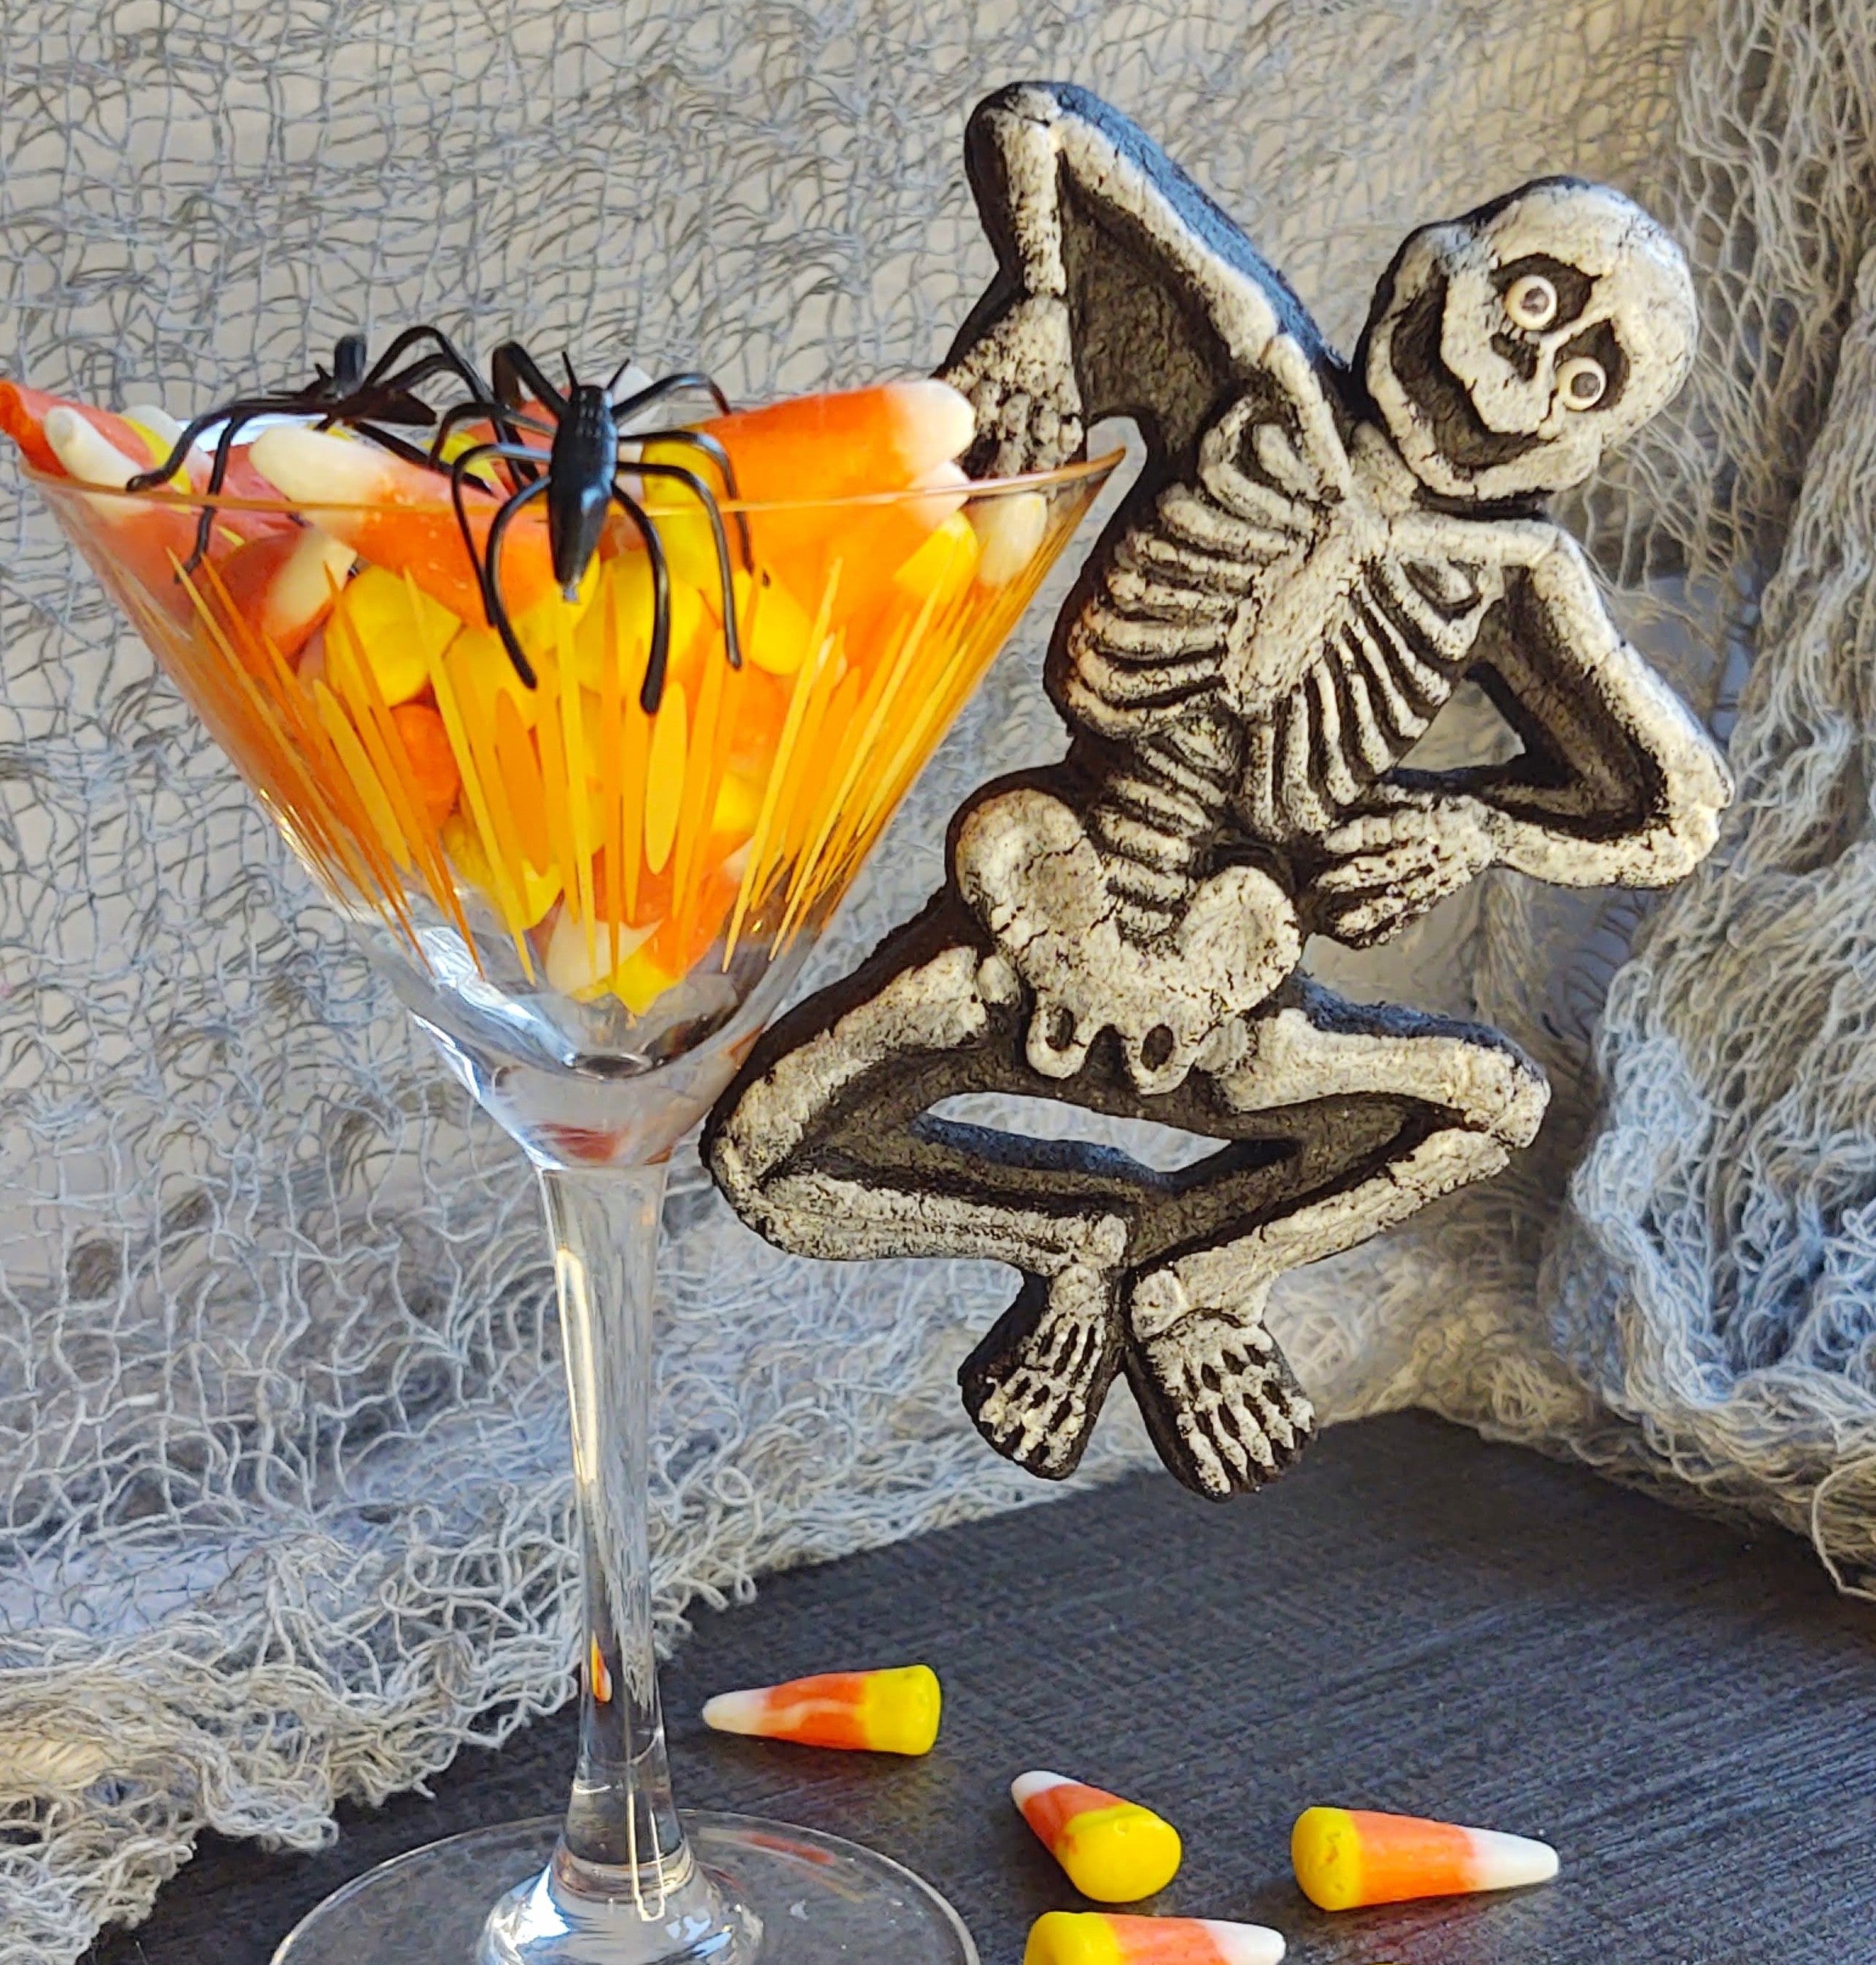 Skeleton Martini Glass